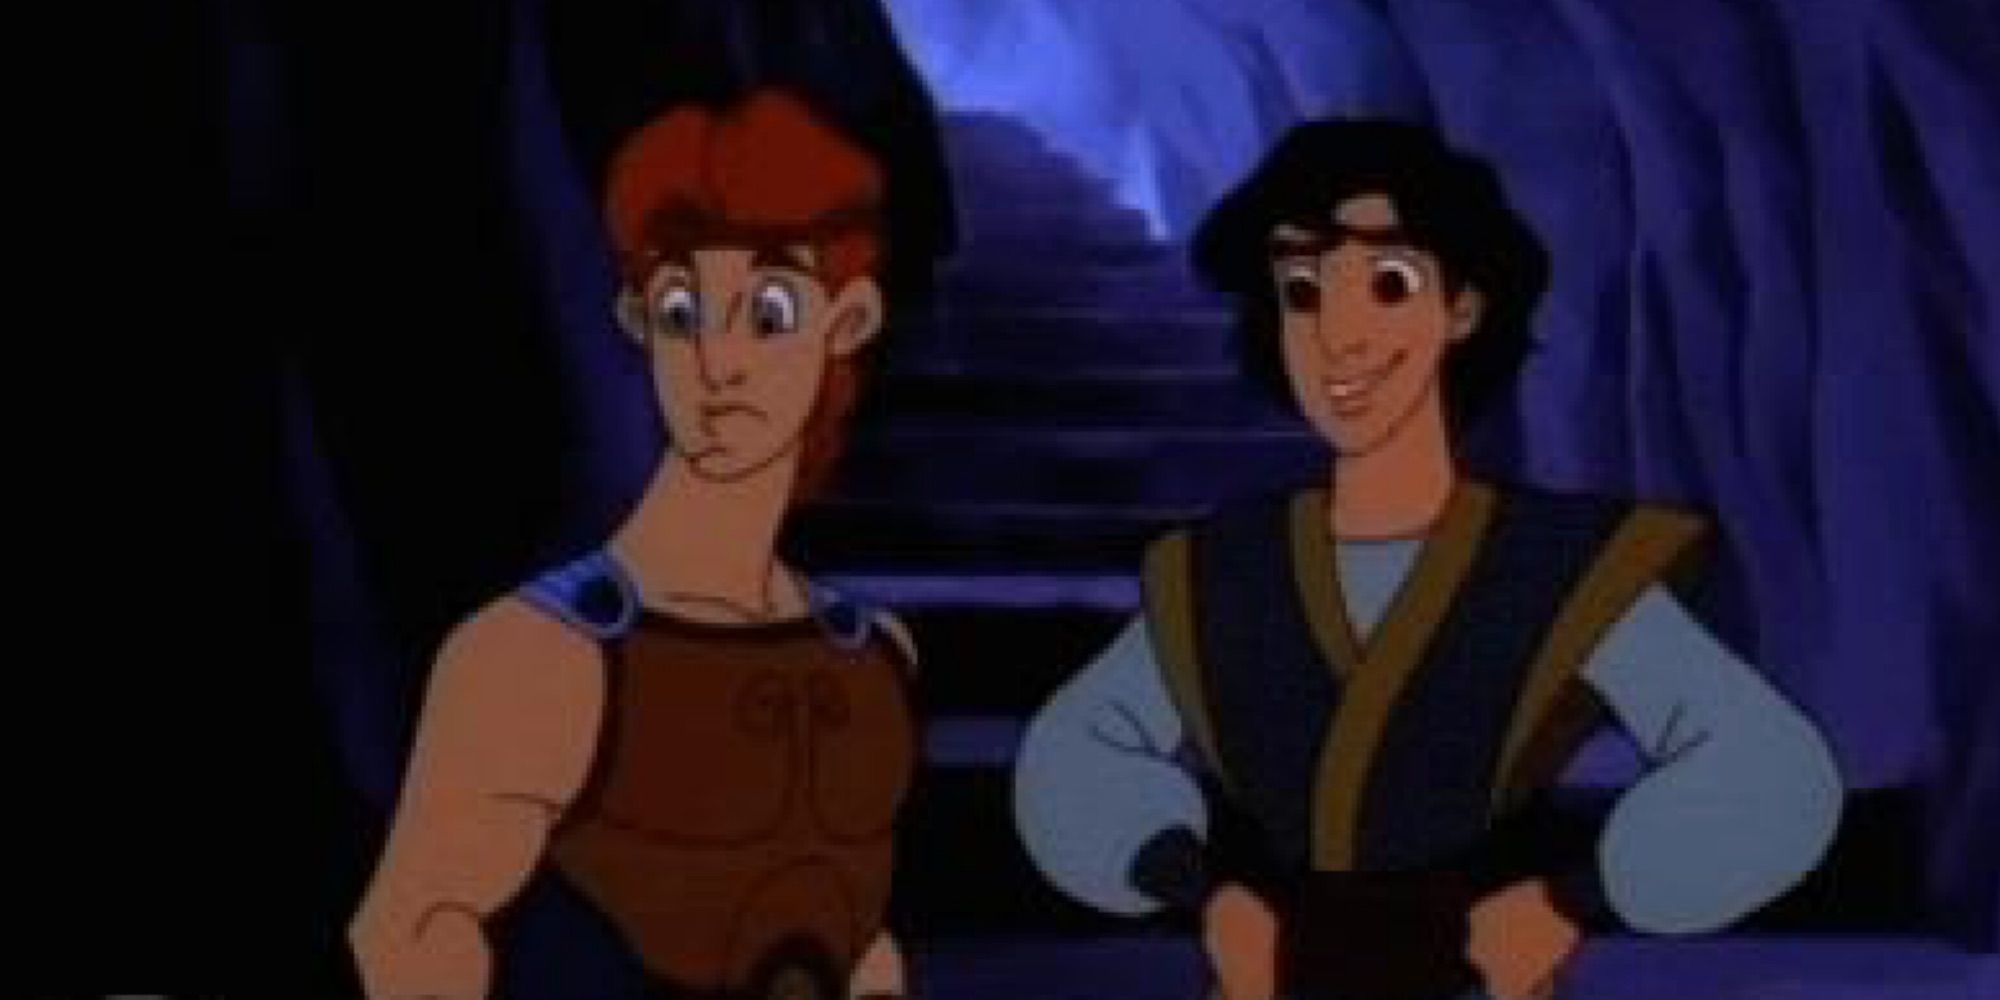 Hercules and Aladdin